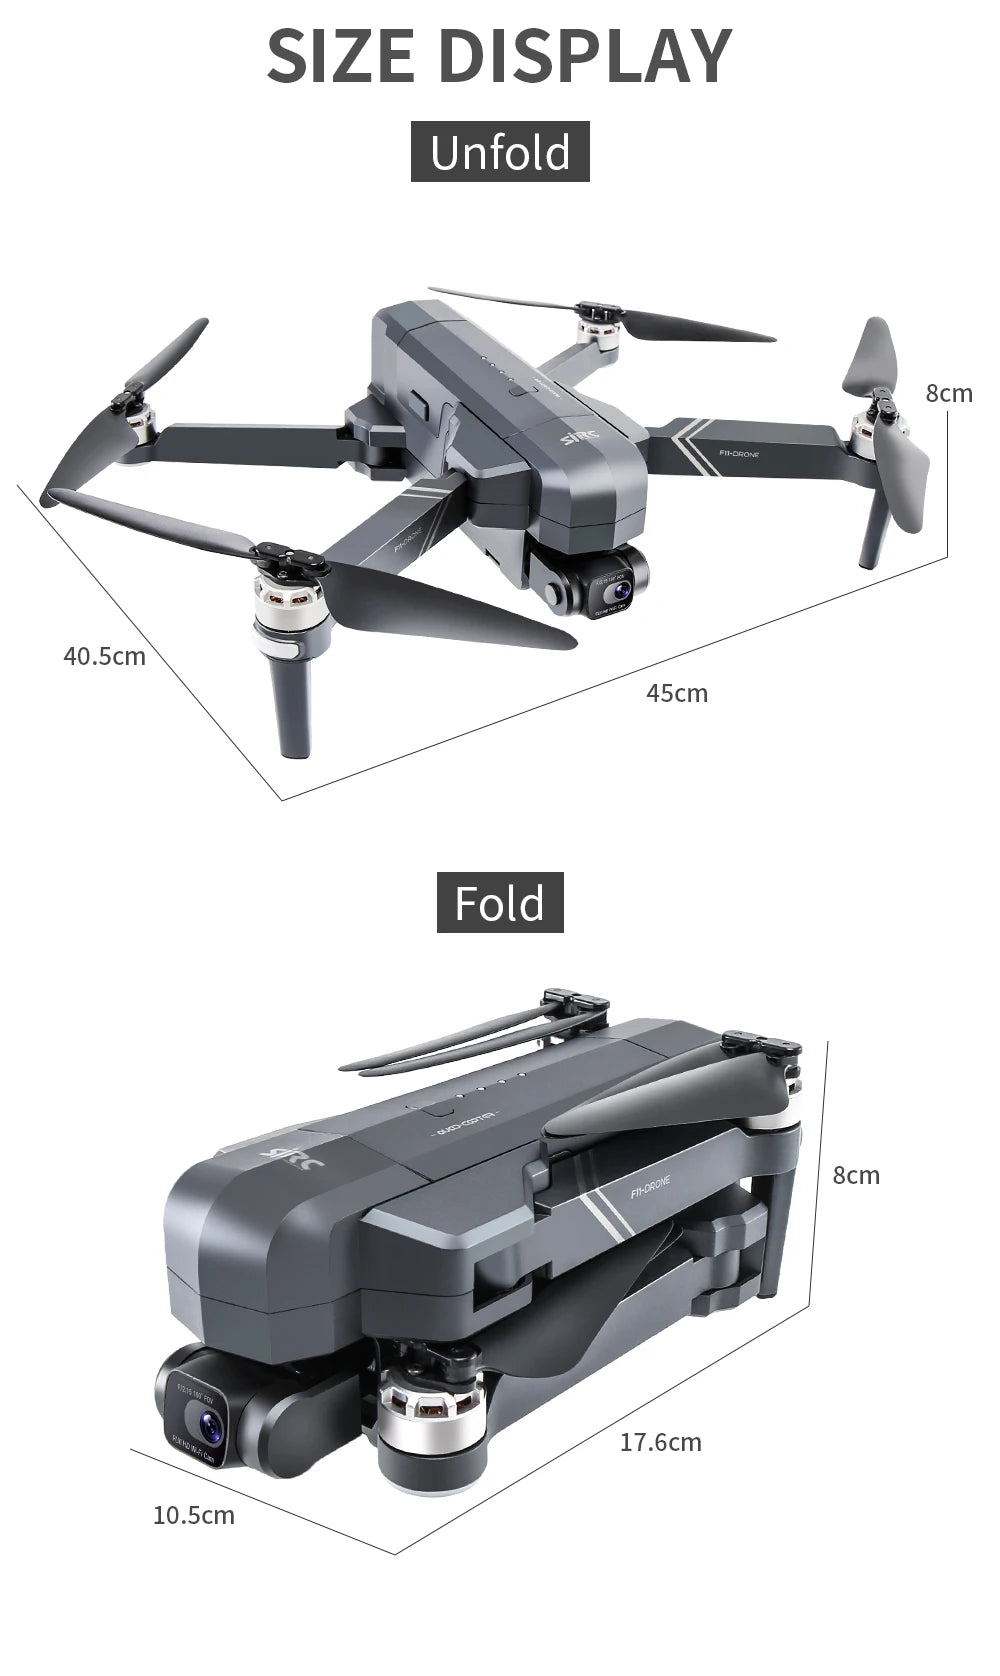 SJRC F11 / F11S  Pro Drone, SIZE DISPLAY Unfold 8cm Fn-D6o 40.